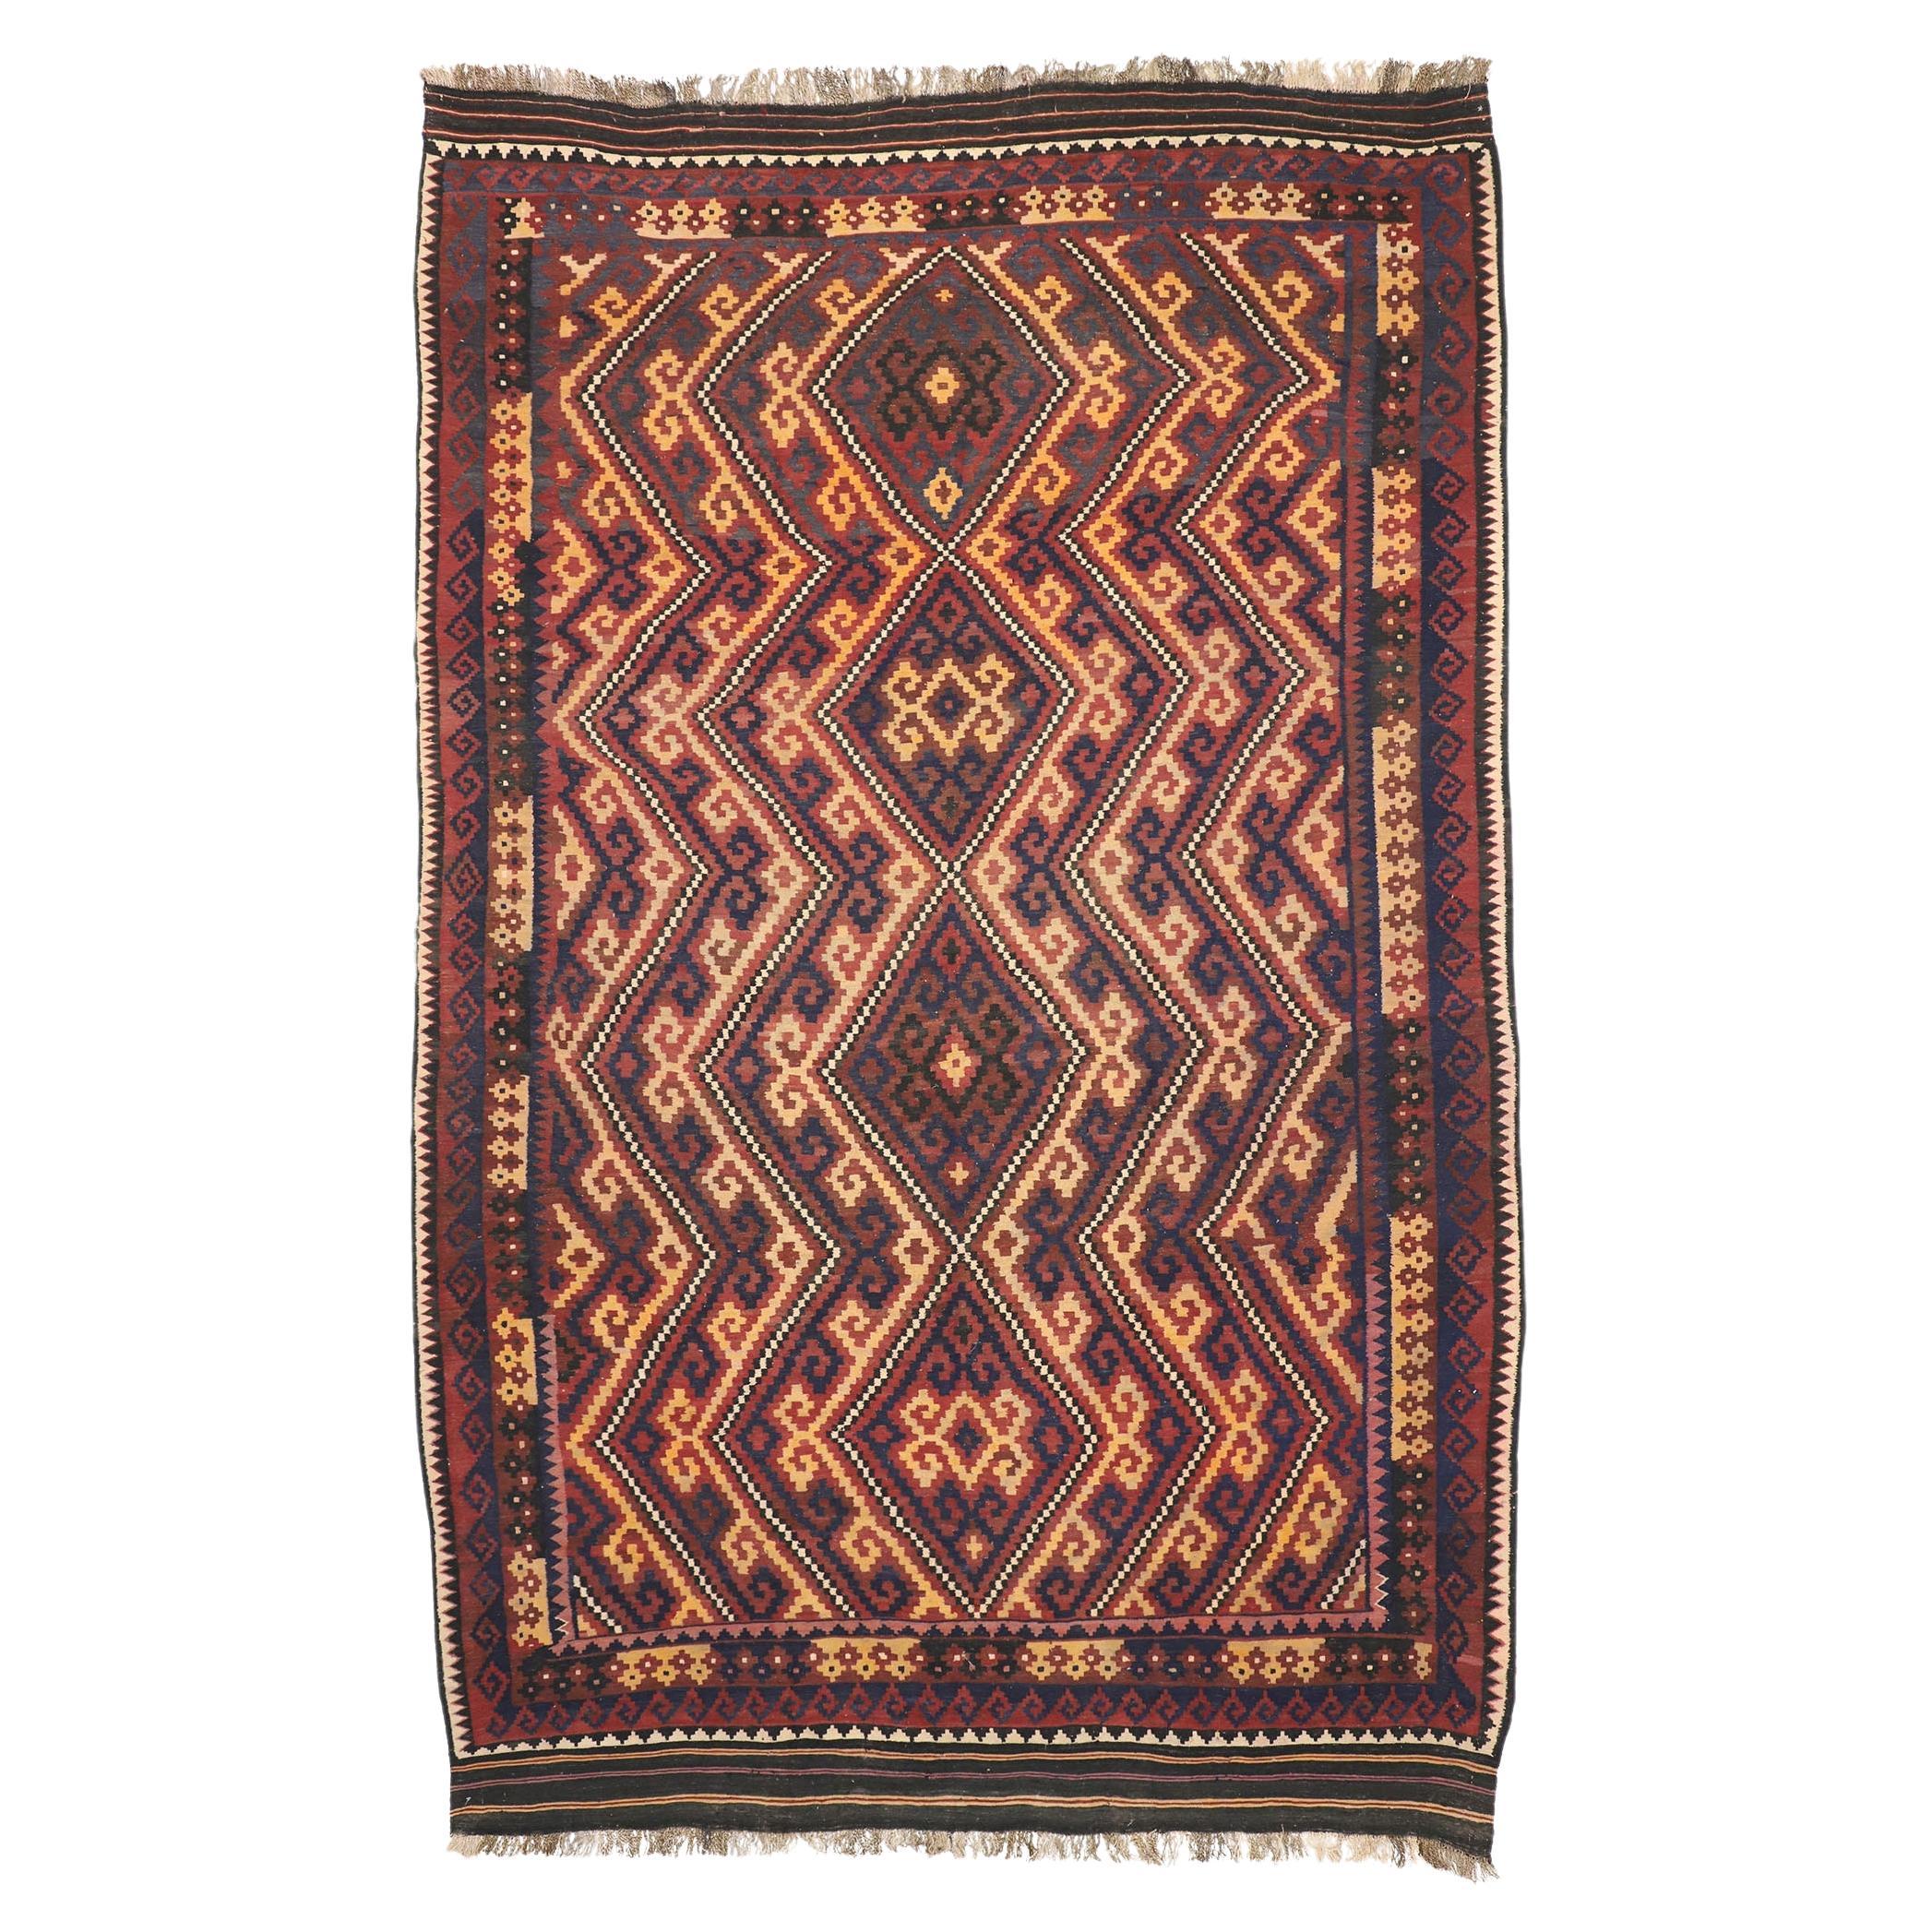 Rustic Vintage Afghan Kilim Rug, Southwest Desert Meets Contemporary Santa Fe